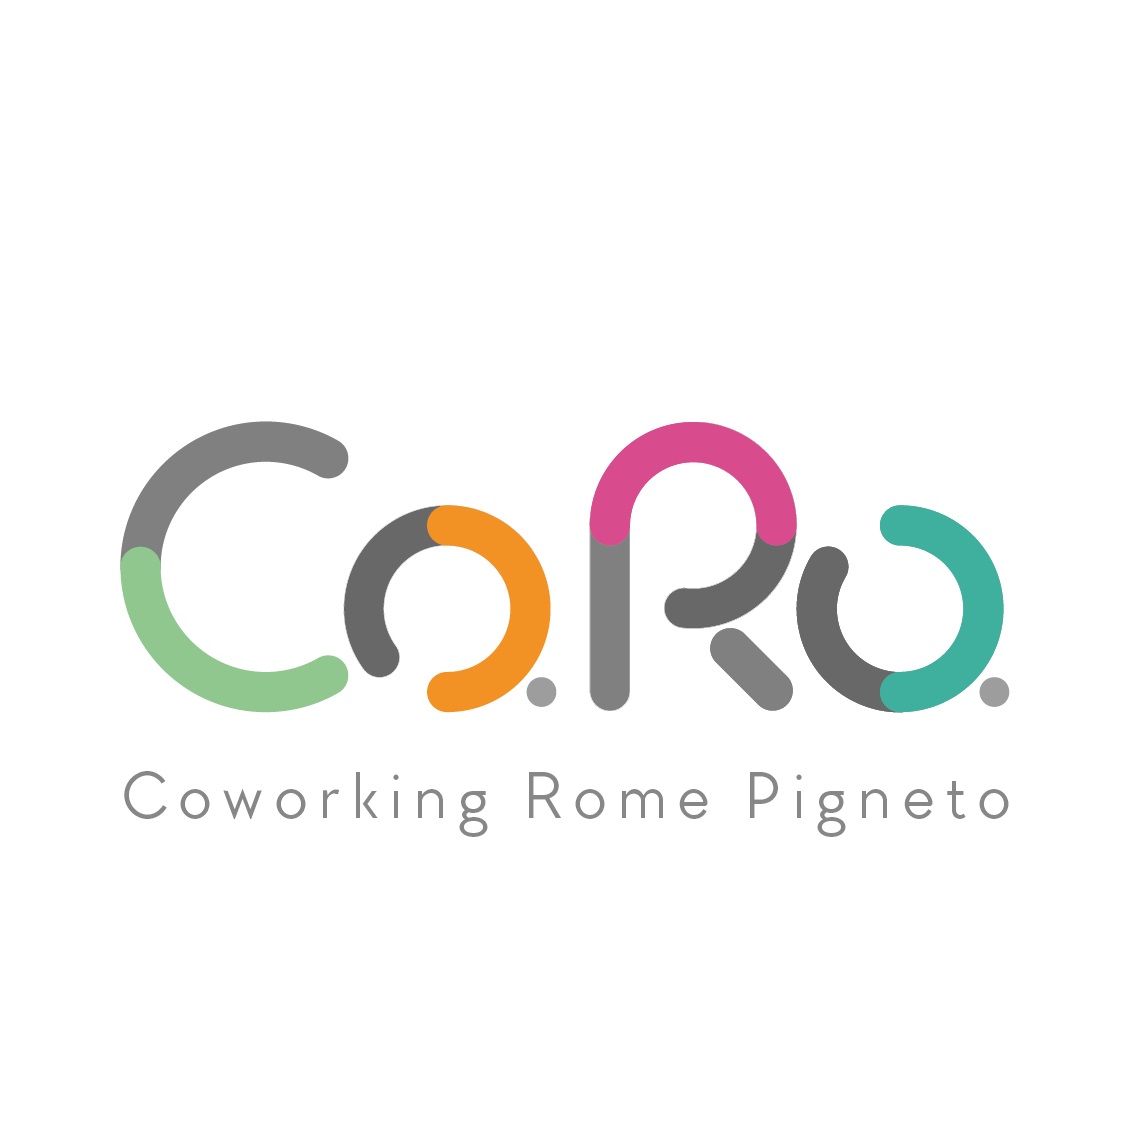 Co.Ro. Coworking Rome Pigneto Pigneto